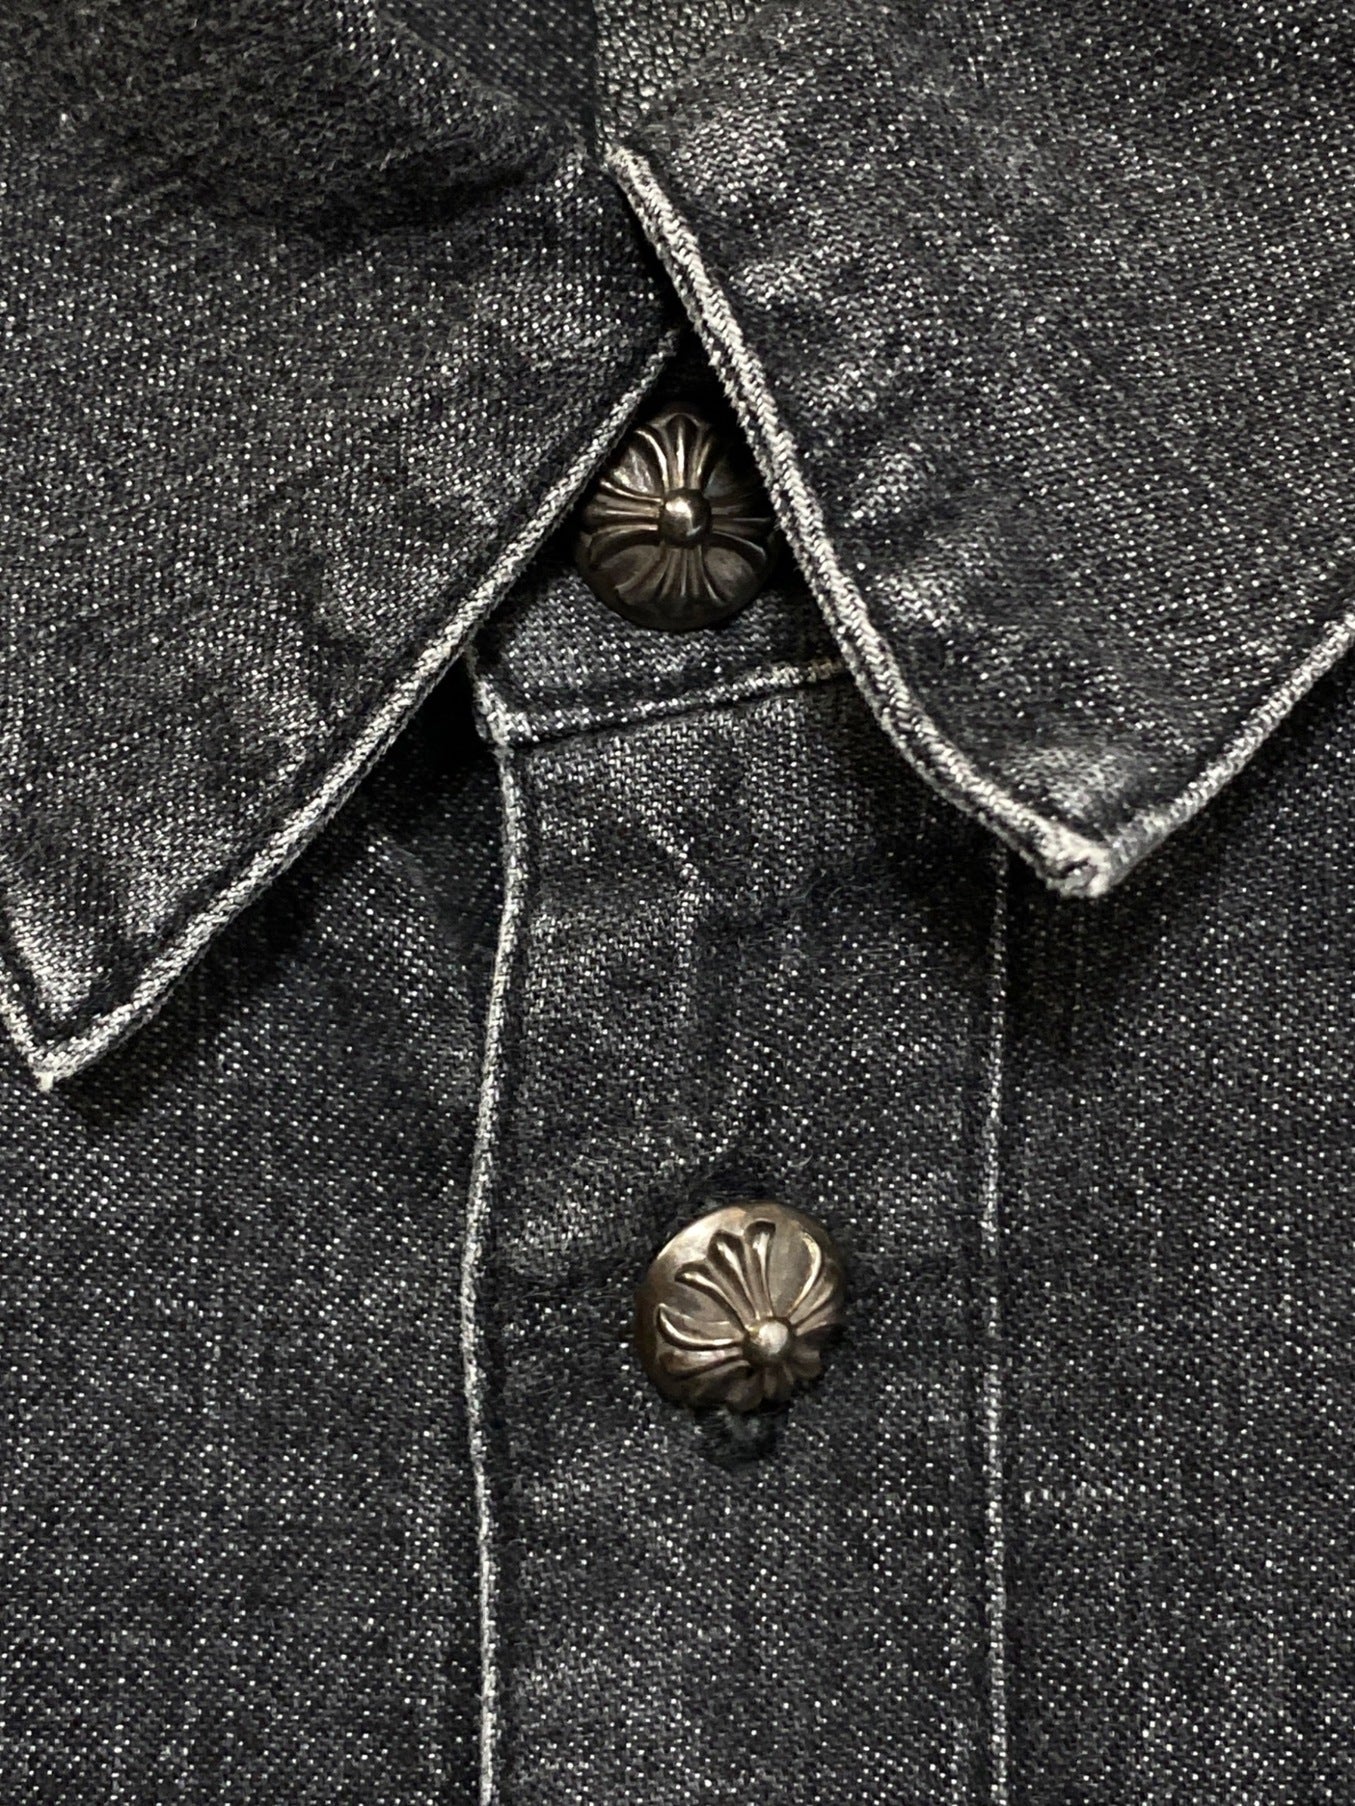 Chrome Hearts銀色鈕扣牛仔襯衫2211-304-4872